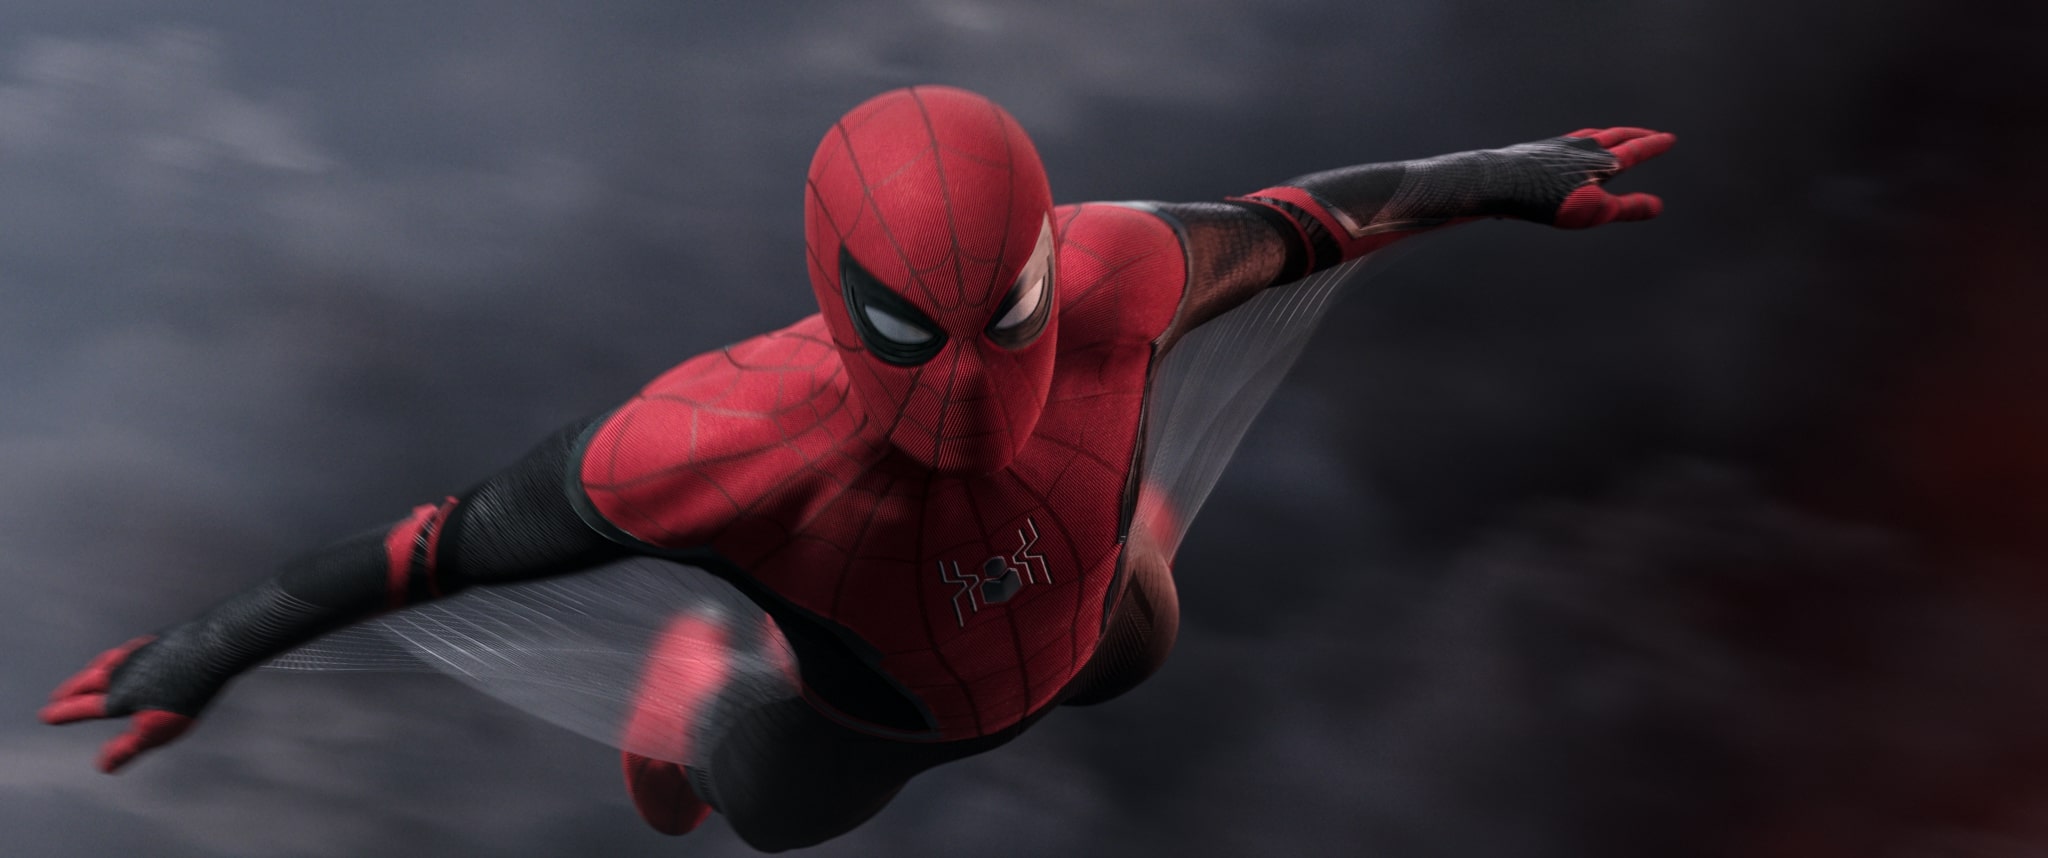 Spider-Man: Far From Home, Joe Russo spiega la timeline del film e i legami con Avengers: Endgame thumbnail